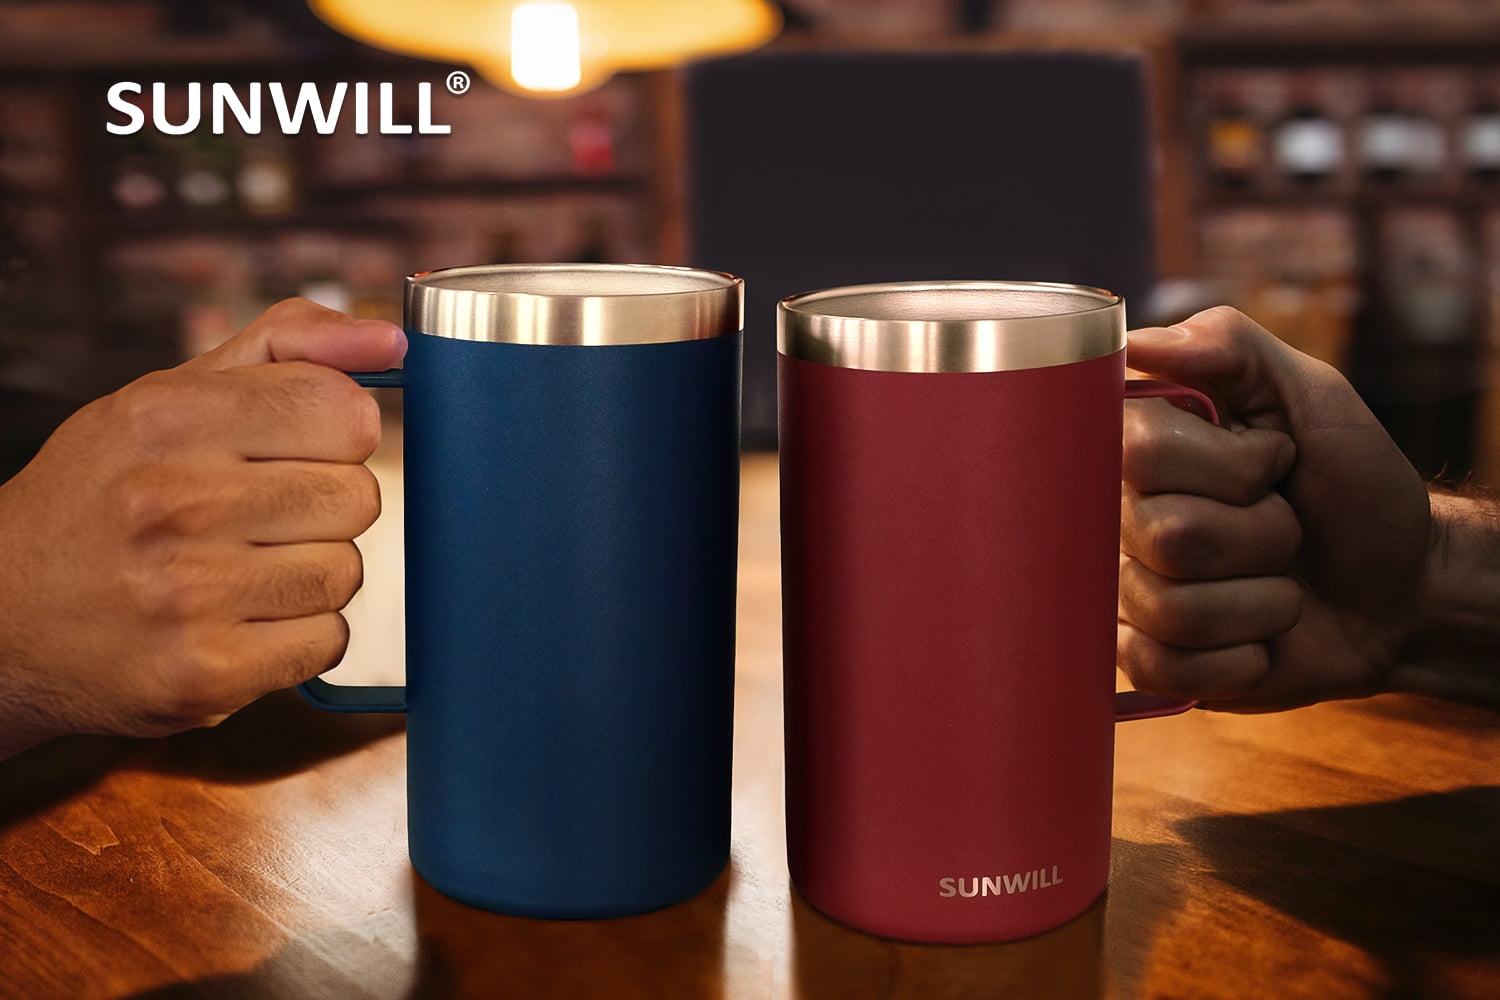 Sunwell, Dining, Sunwill Vacuum Insulated Brown Coffee Mug Hotcold